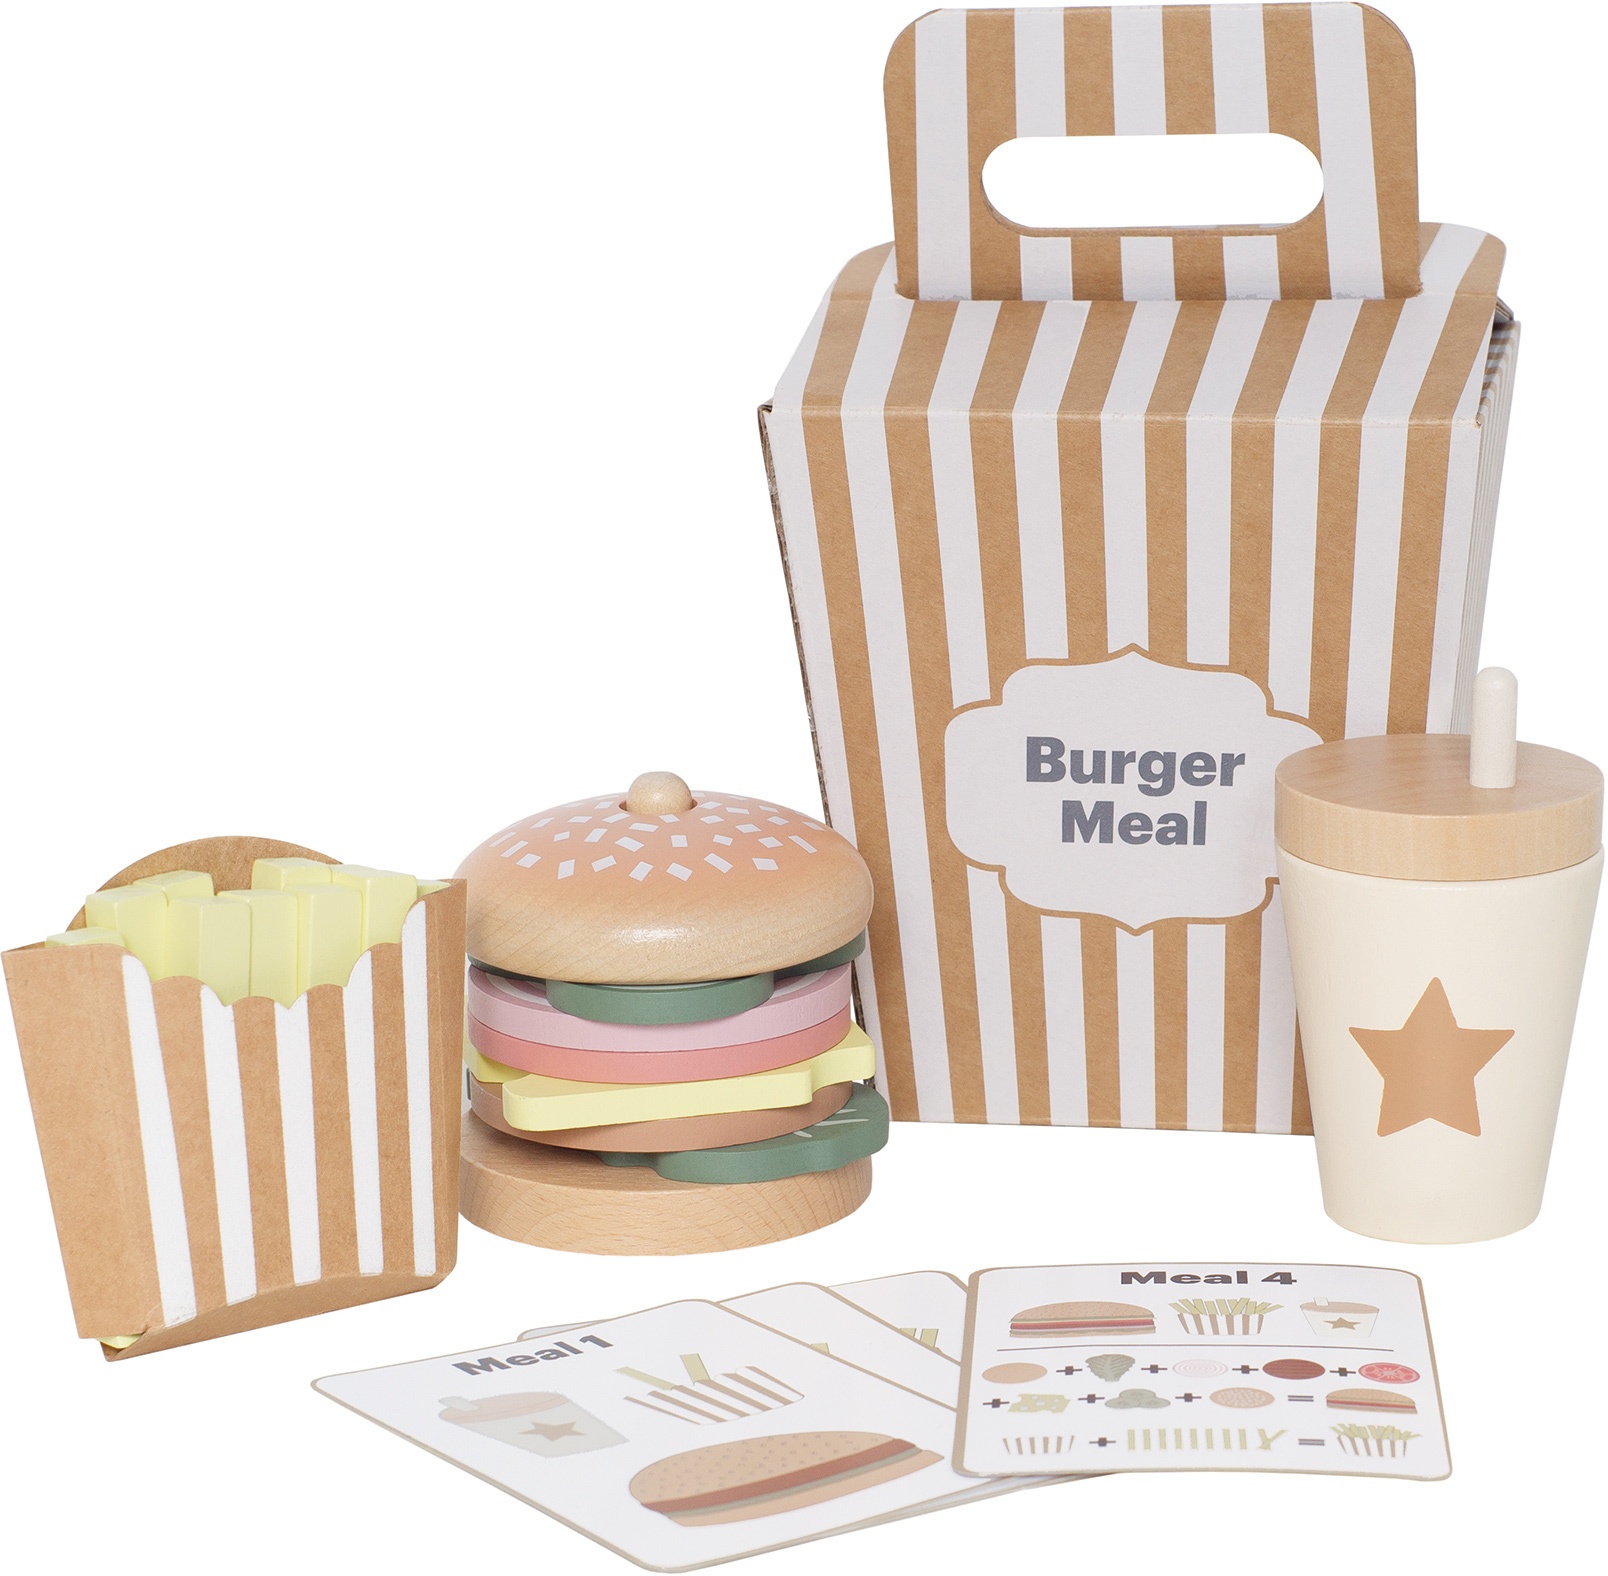 Spiel-Lebensmittel Burger Meal Aus Holz